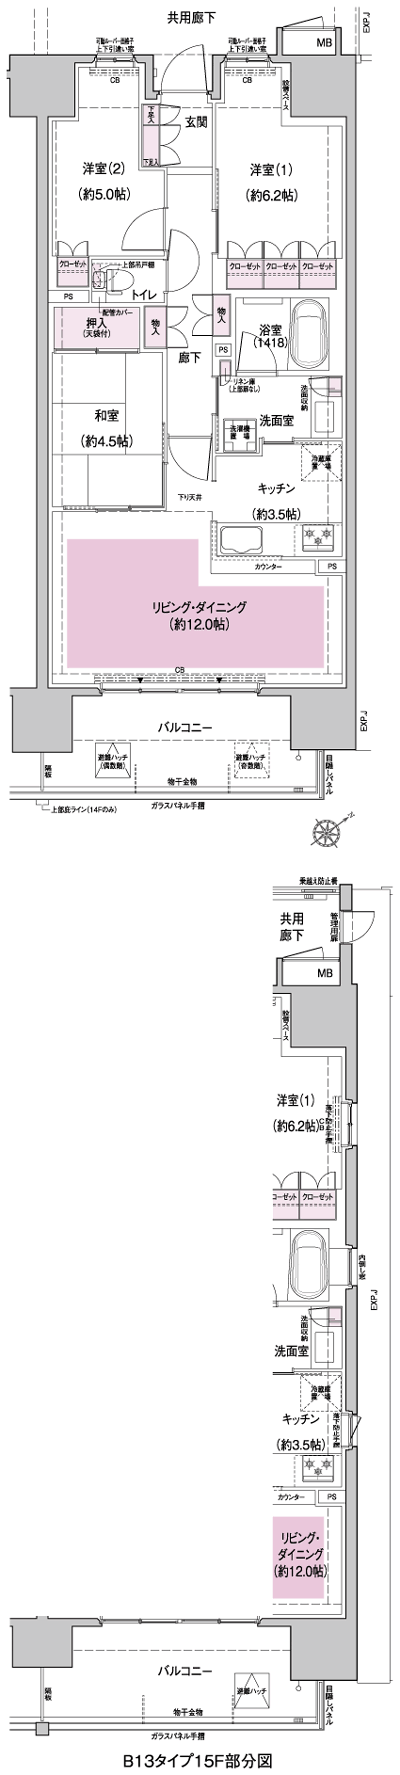 Floor: 3LDK, occupied area: 71.68 sq m, Price: 52,980,000 yen, now on sale